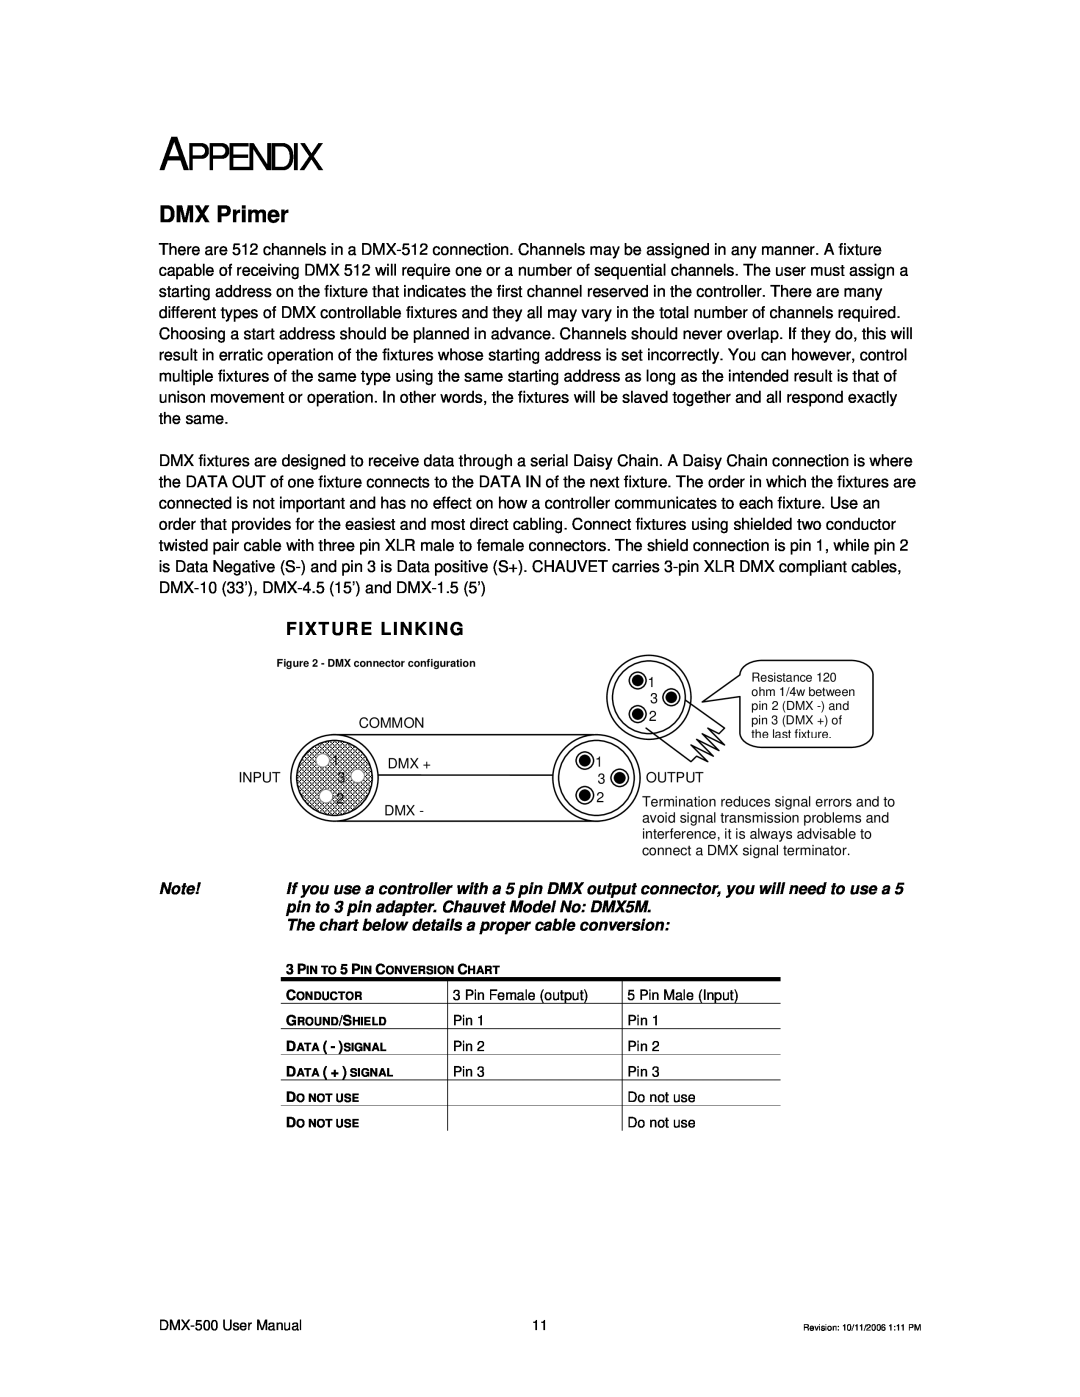 Chauvet DMX-500 user manual Appendix, DMX Primer, Fixture Linking 